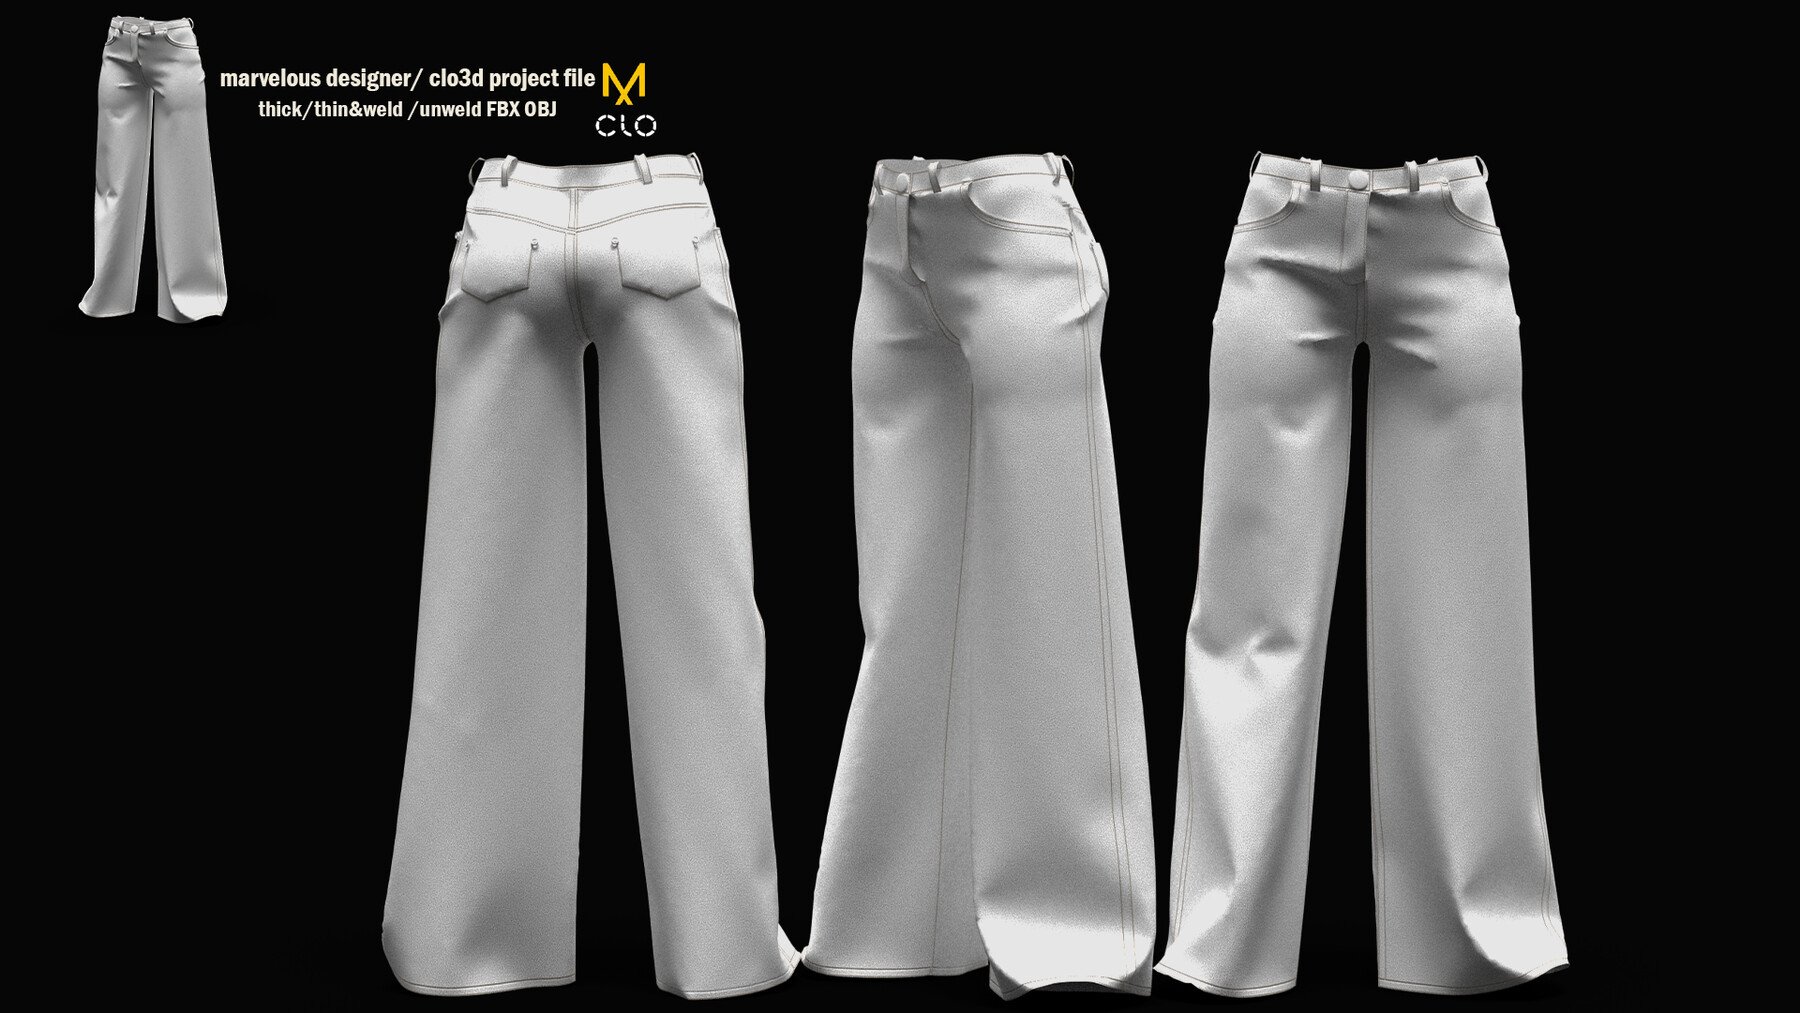 ArtStation - 6 women's jean pants-marvelous designer/clo3d-FBX +OBJ ...